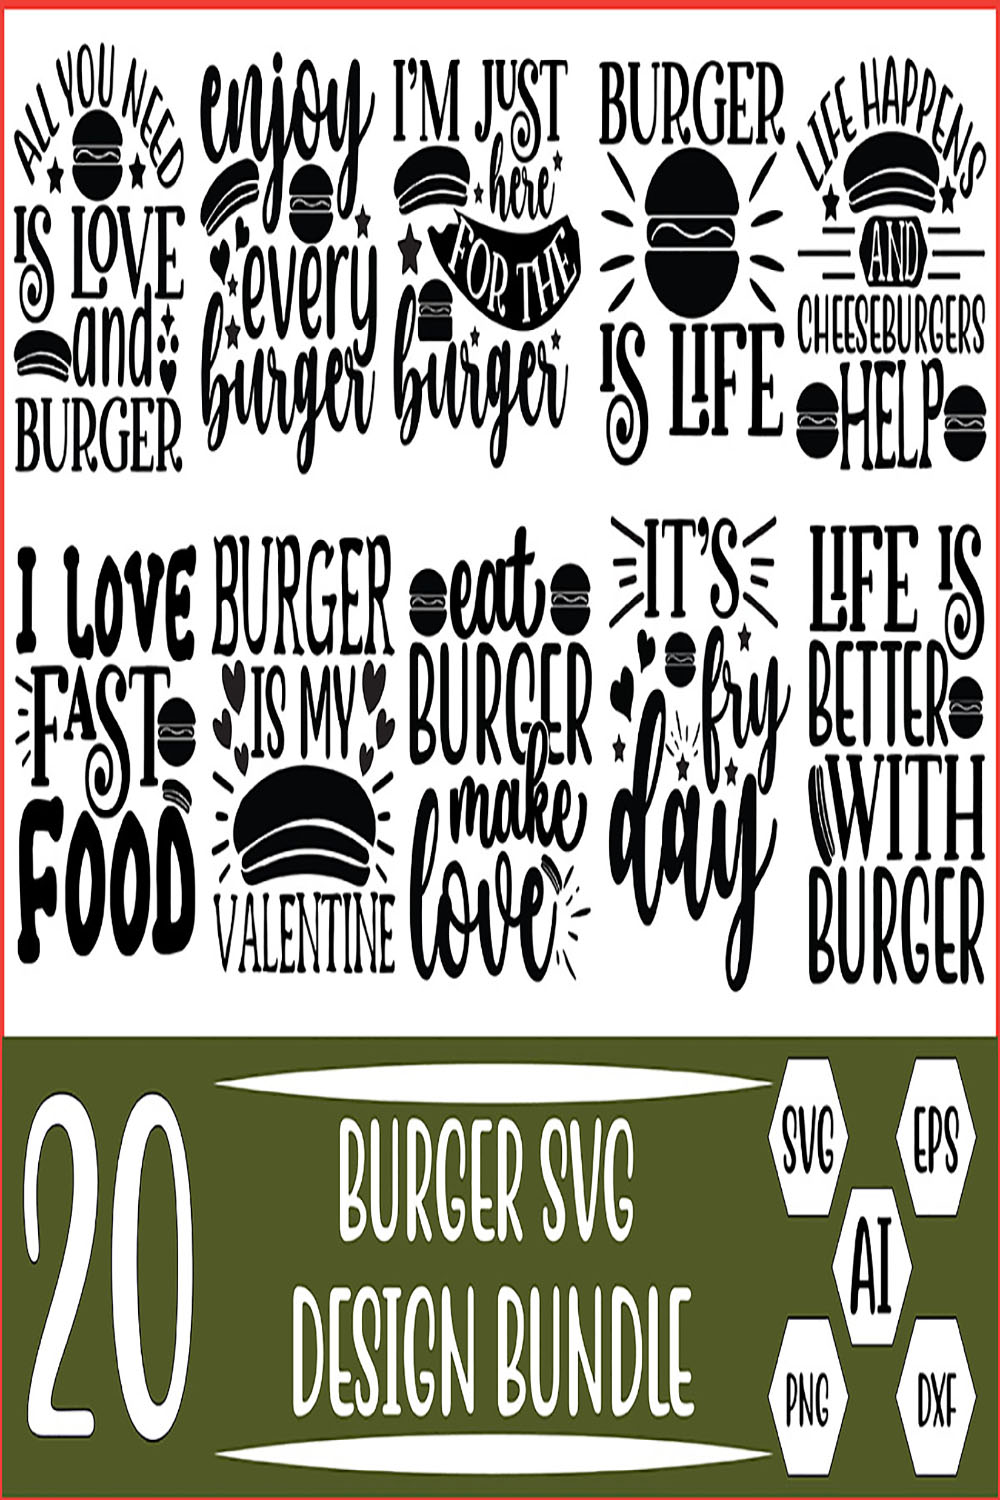 20 Burger SVG Design Bundle Vector Template pinterest preview image.